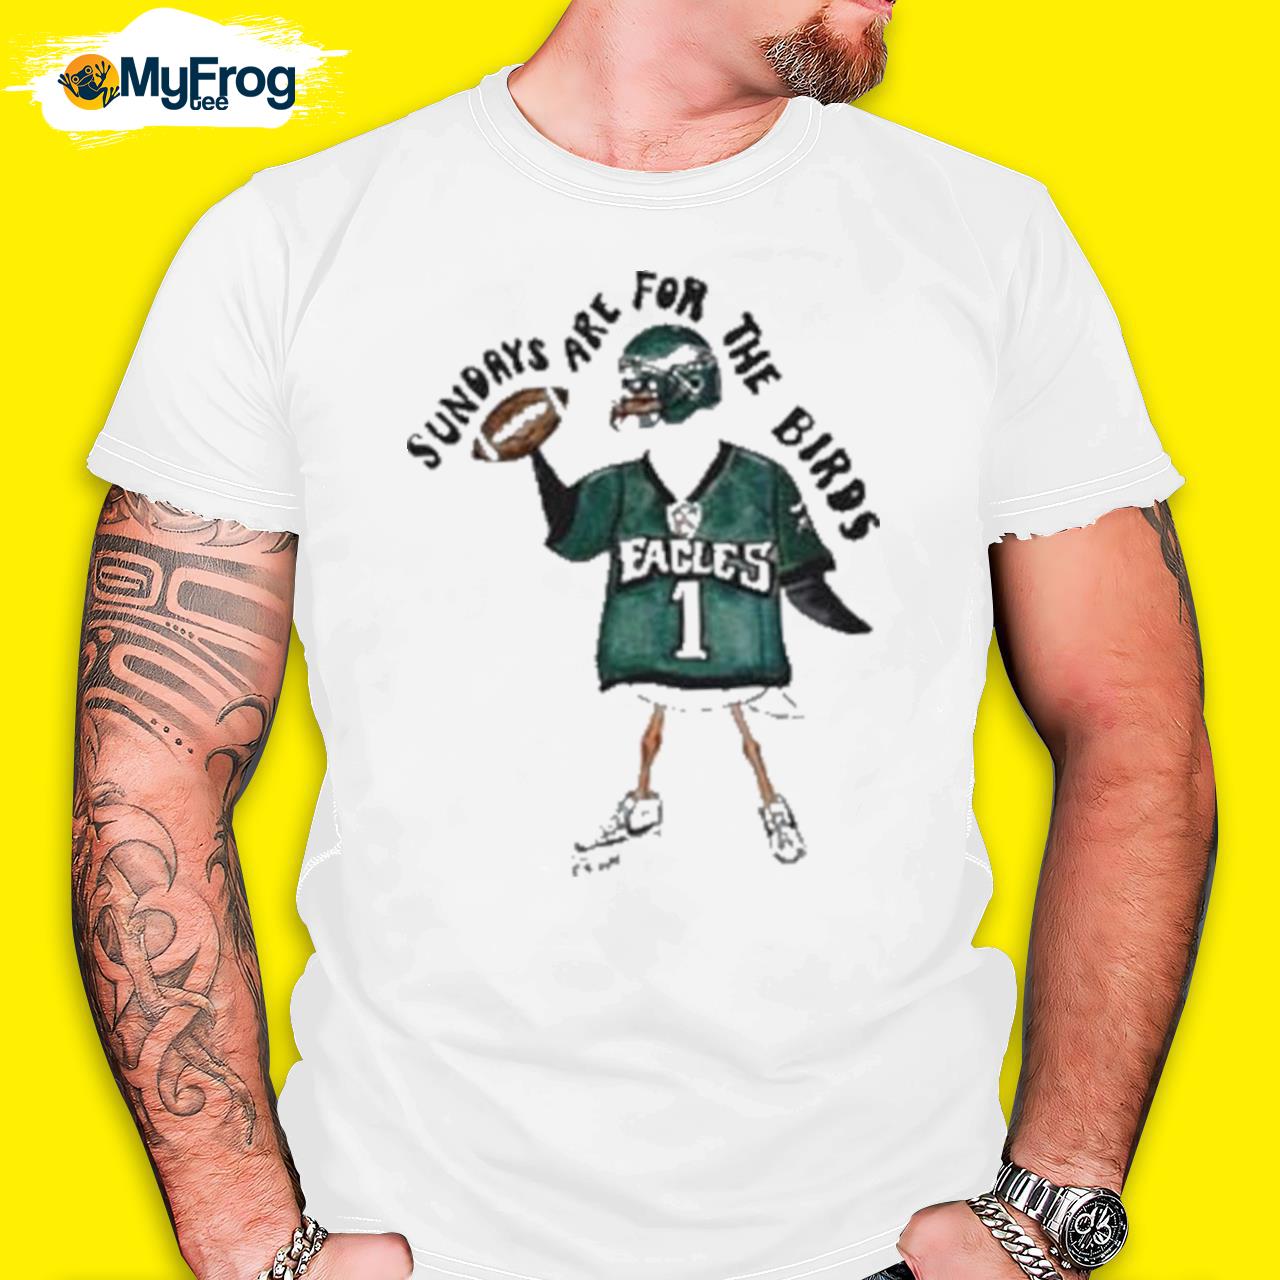 Go Birds Philly Football Vintage Eagles Sweatshirt Shirt - Teeholly